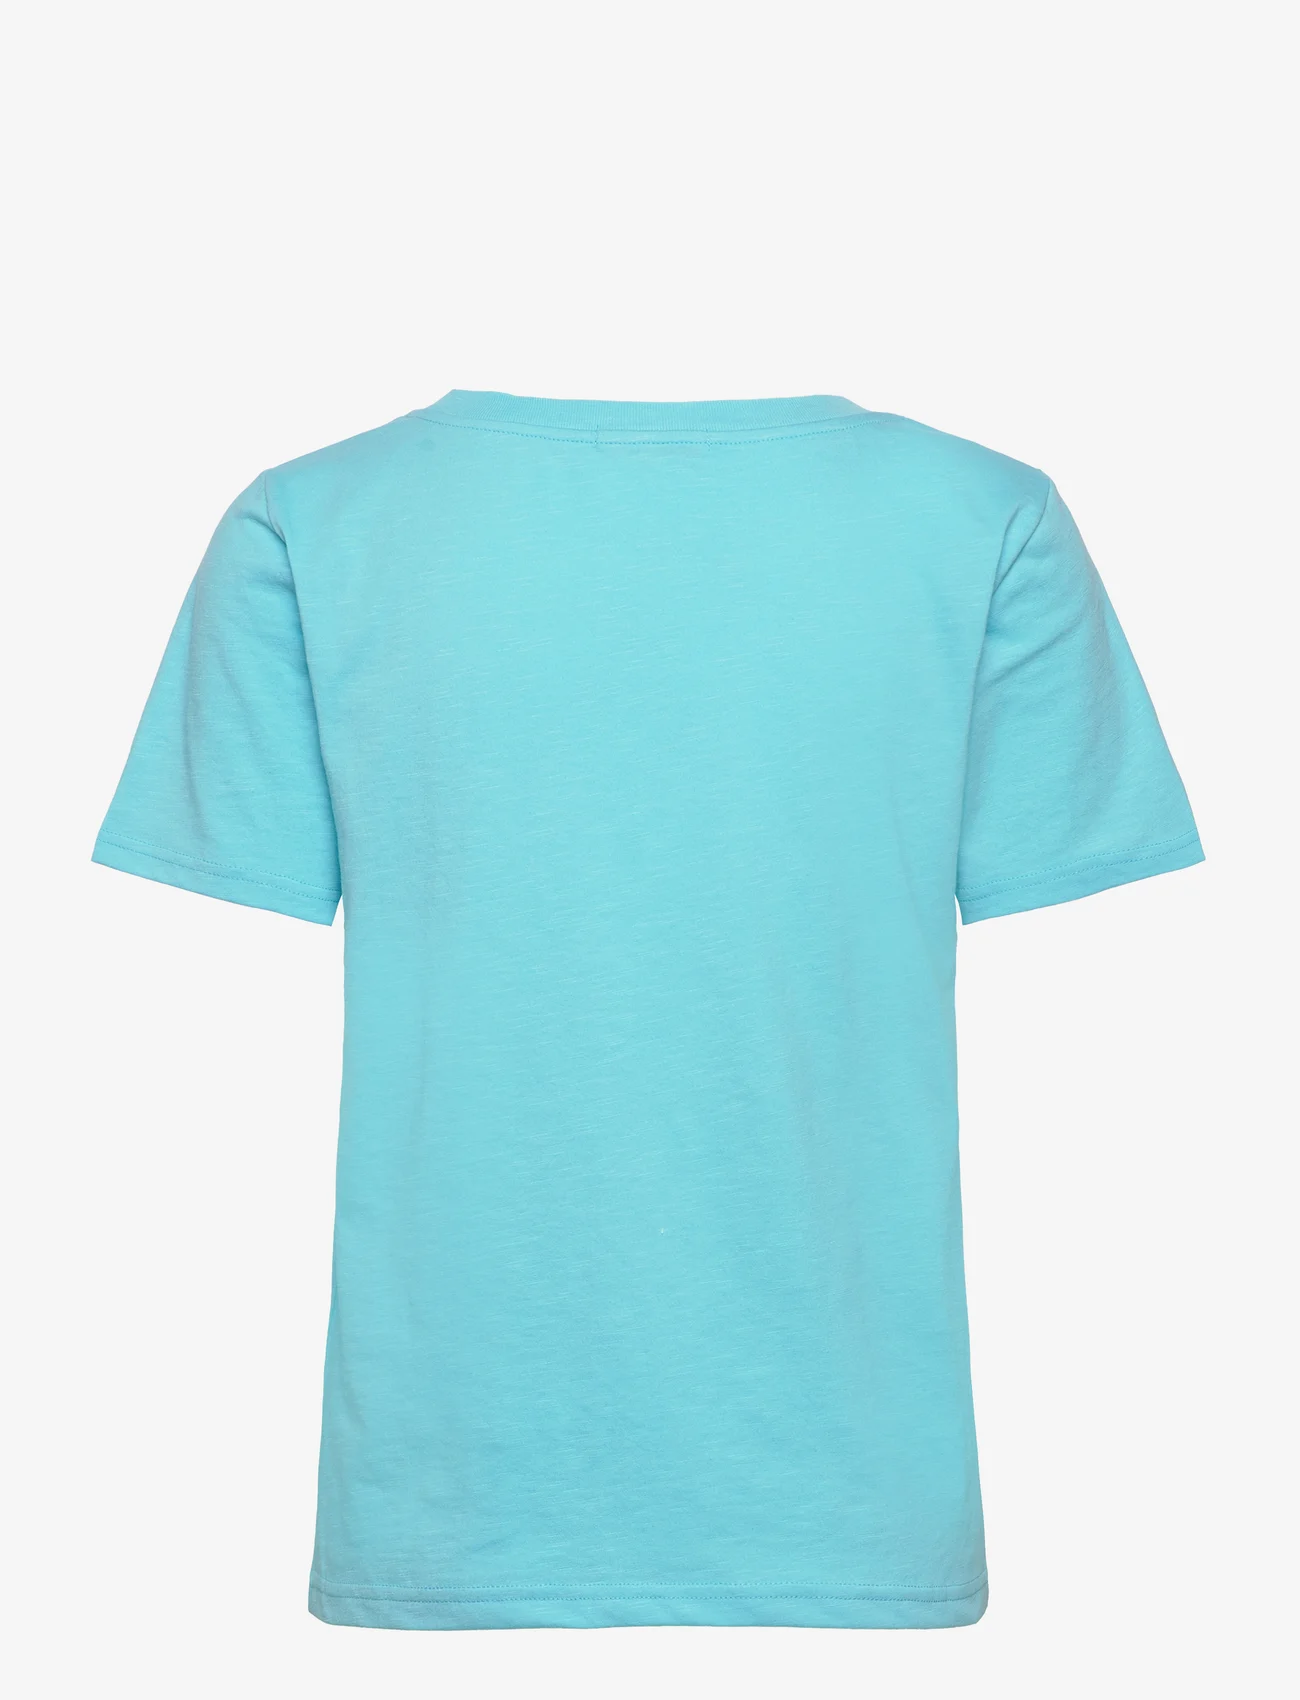 Coster Copenhagen - T-shirt with paint mix - Mid sleeve - t-särgid - aqua blue - 1